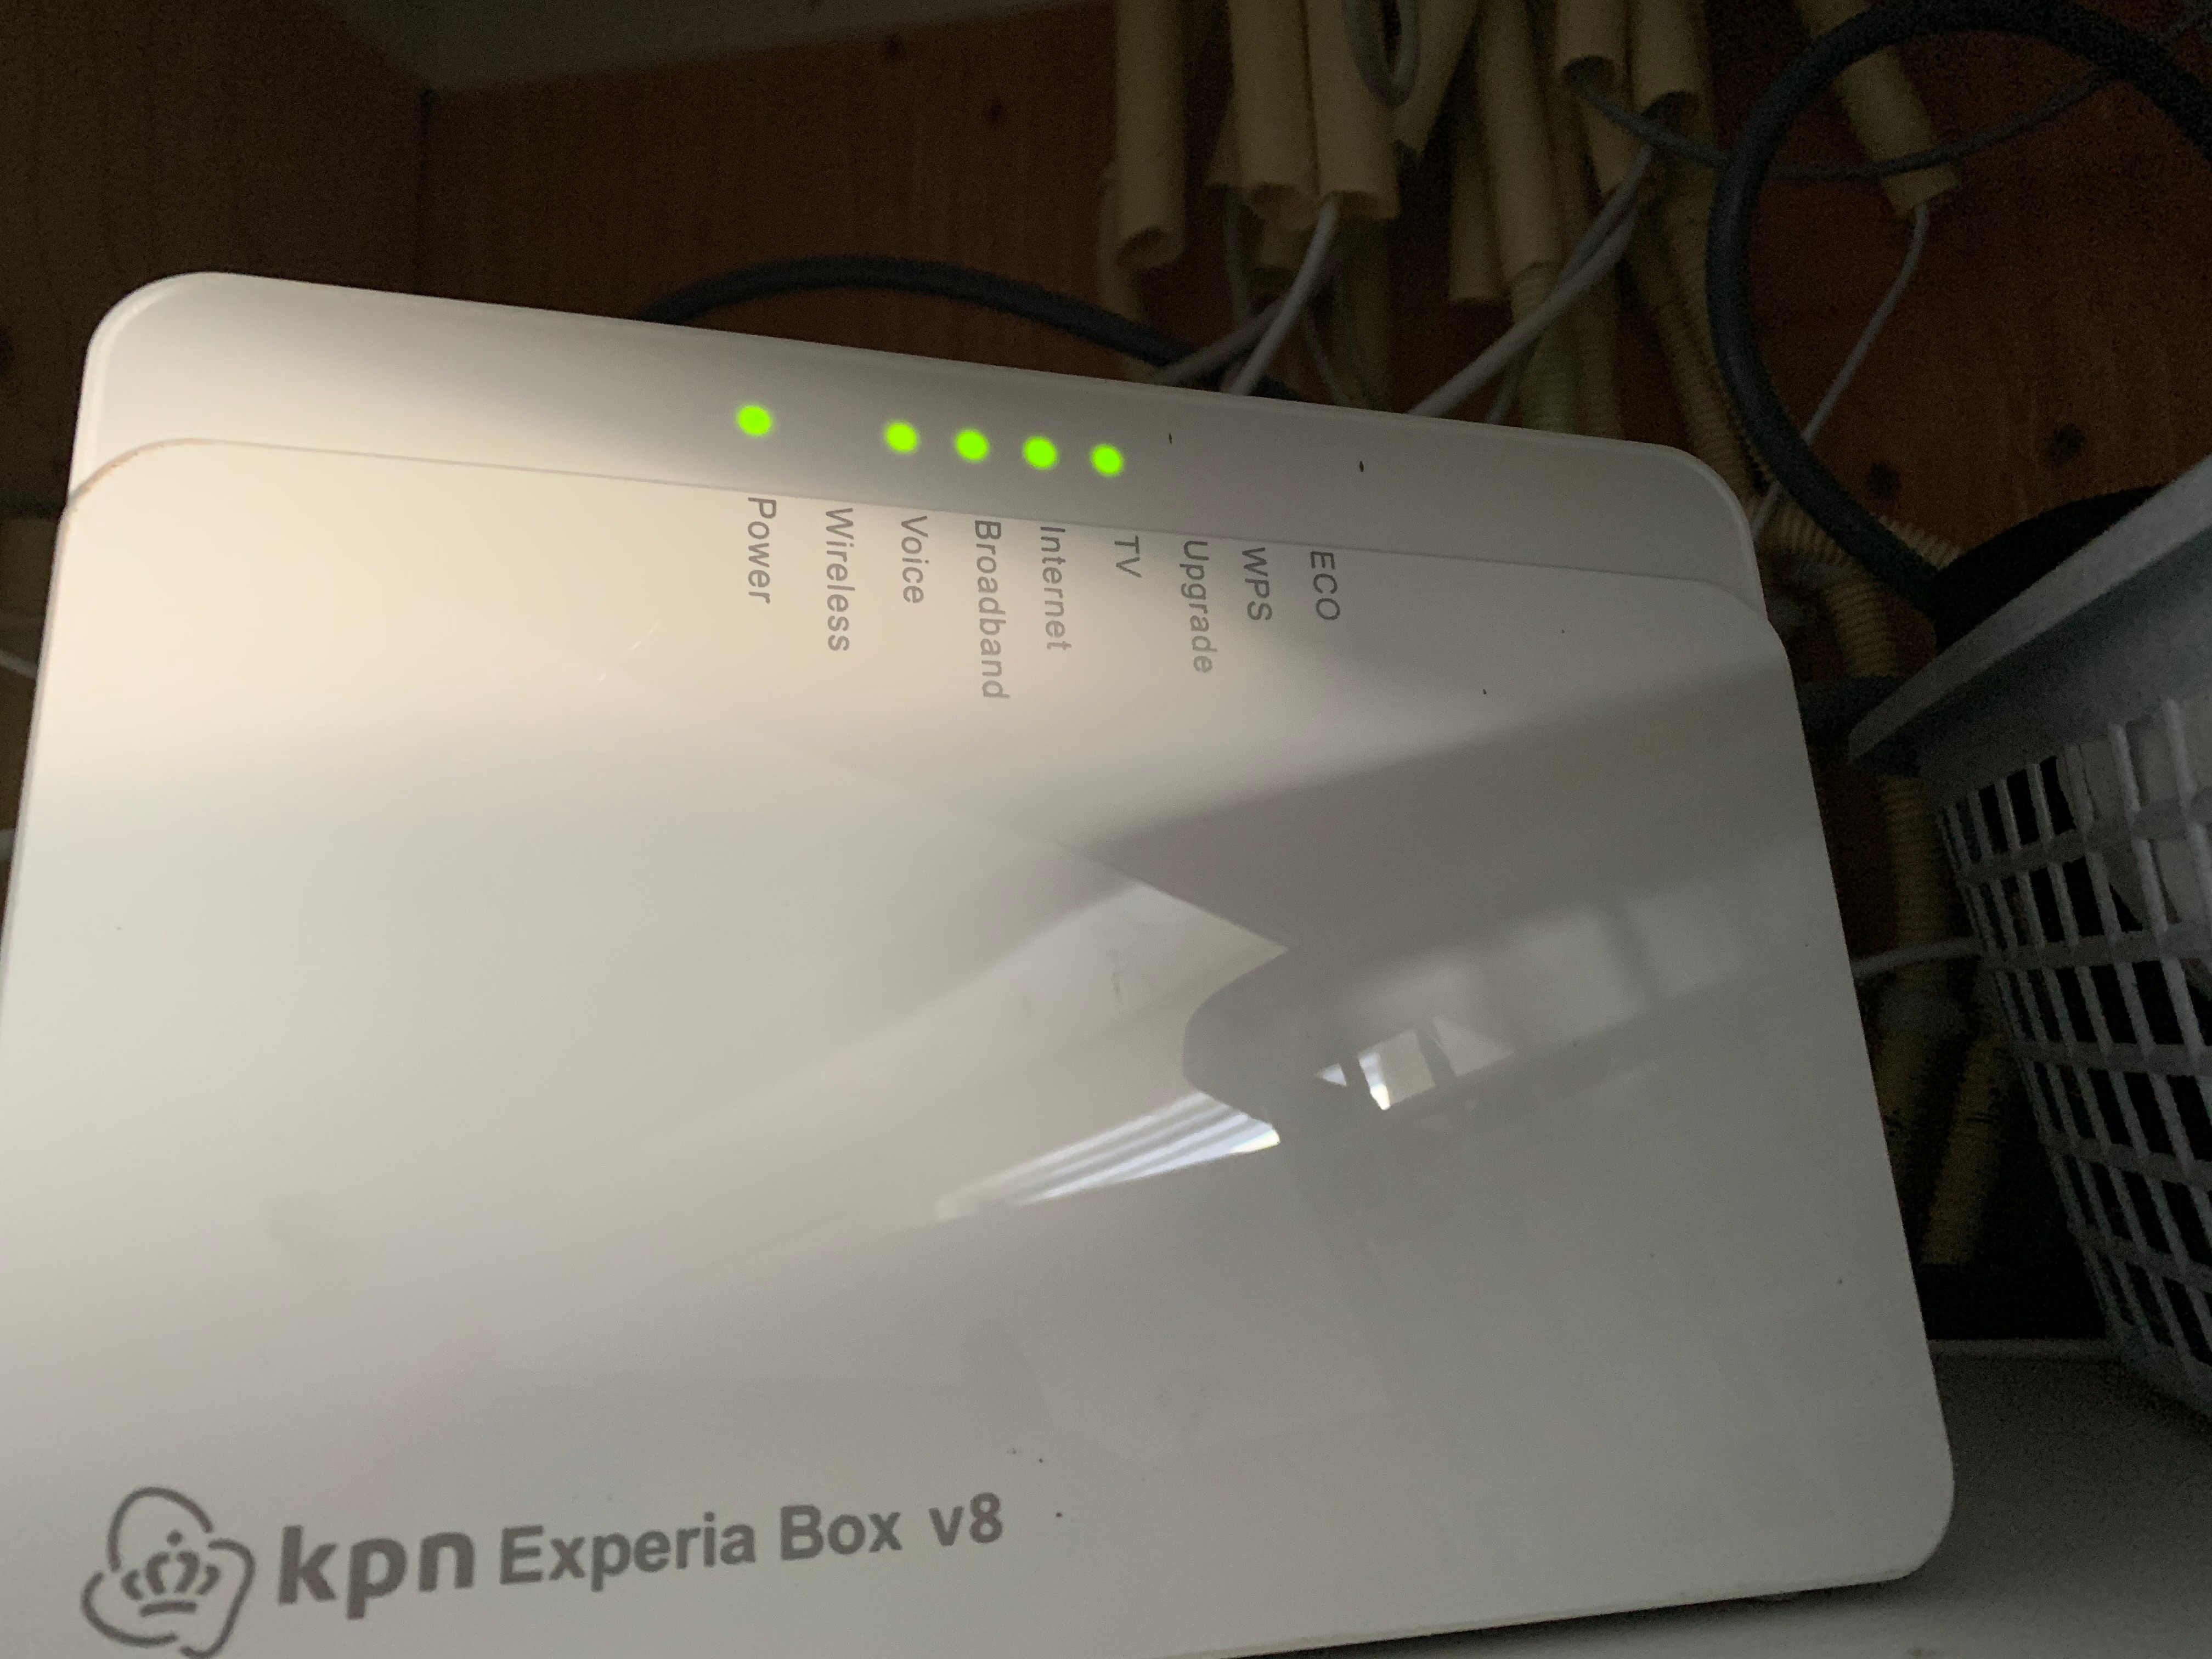 tack Methode Oorzaak Experia Box V8 valt steeds weg en slechte verbinding | KPN Community